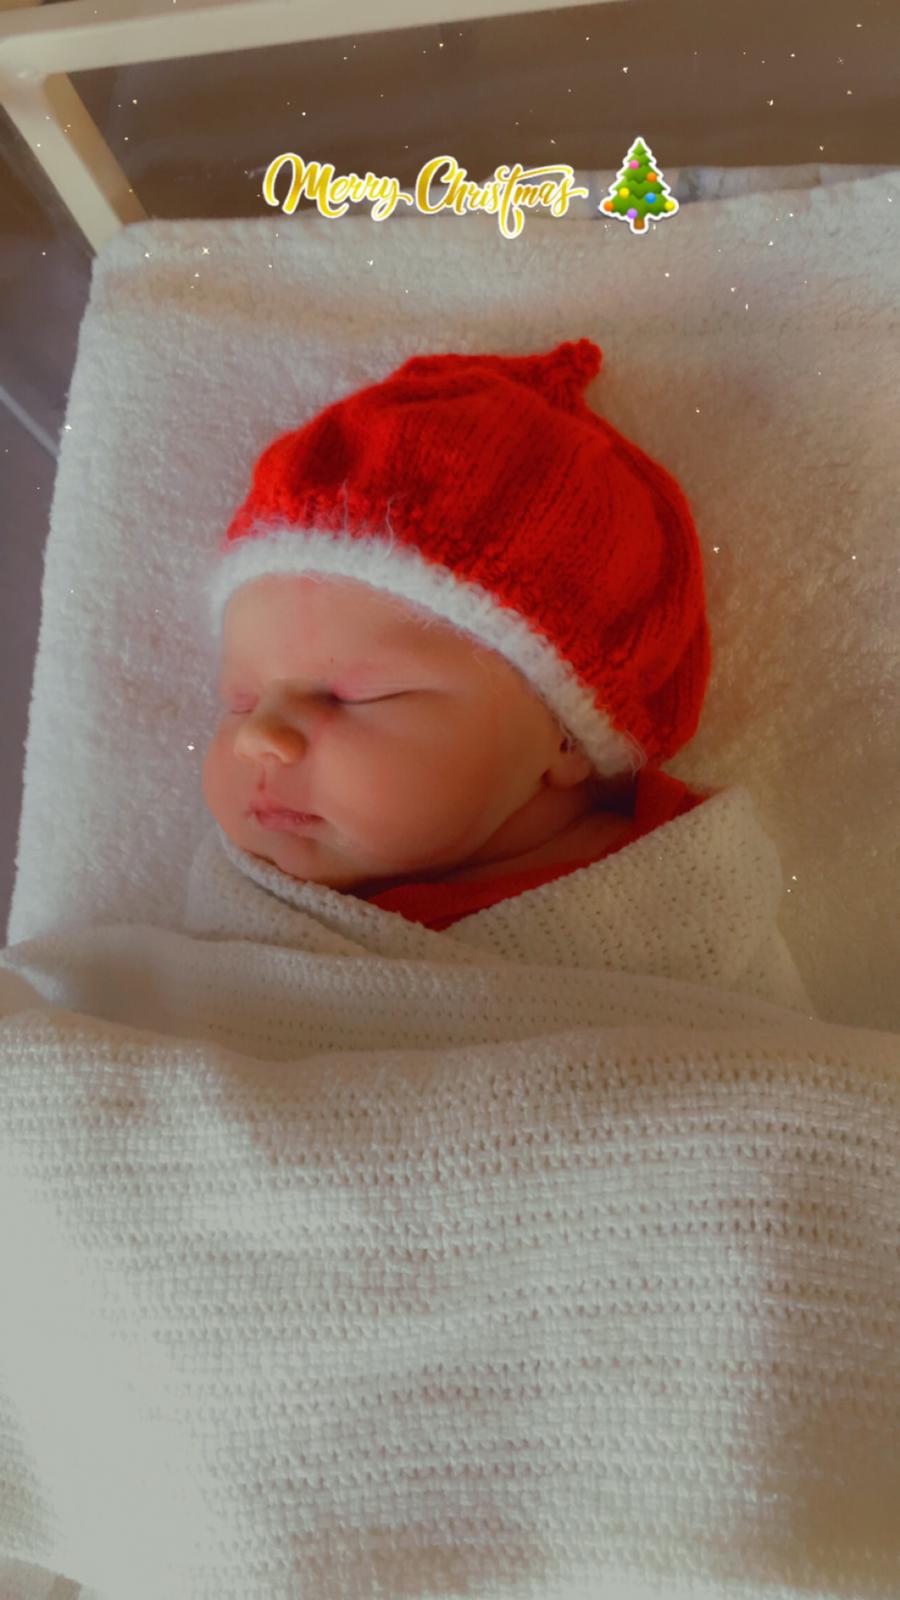 Cara Matilda Crawley was born at 4.58am weighing 8lb 13oz.